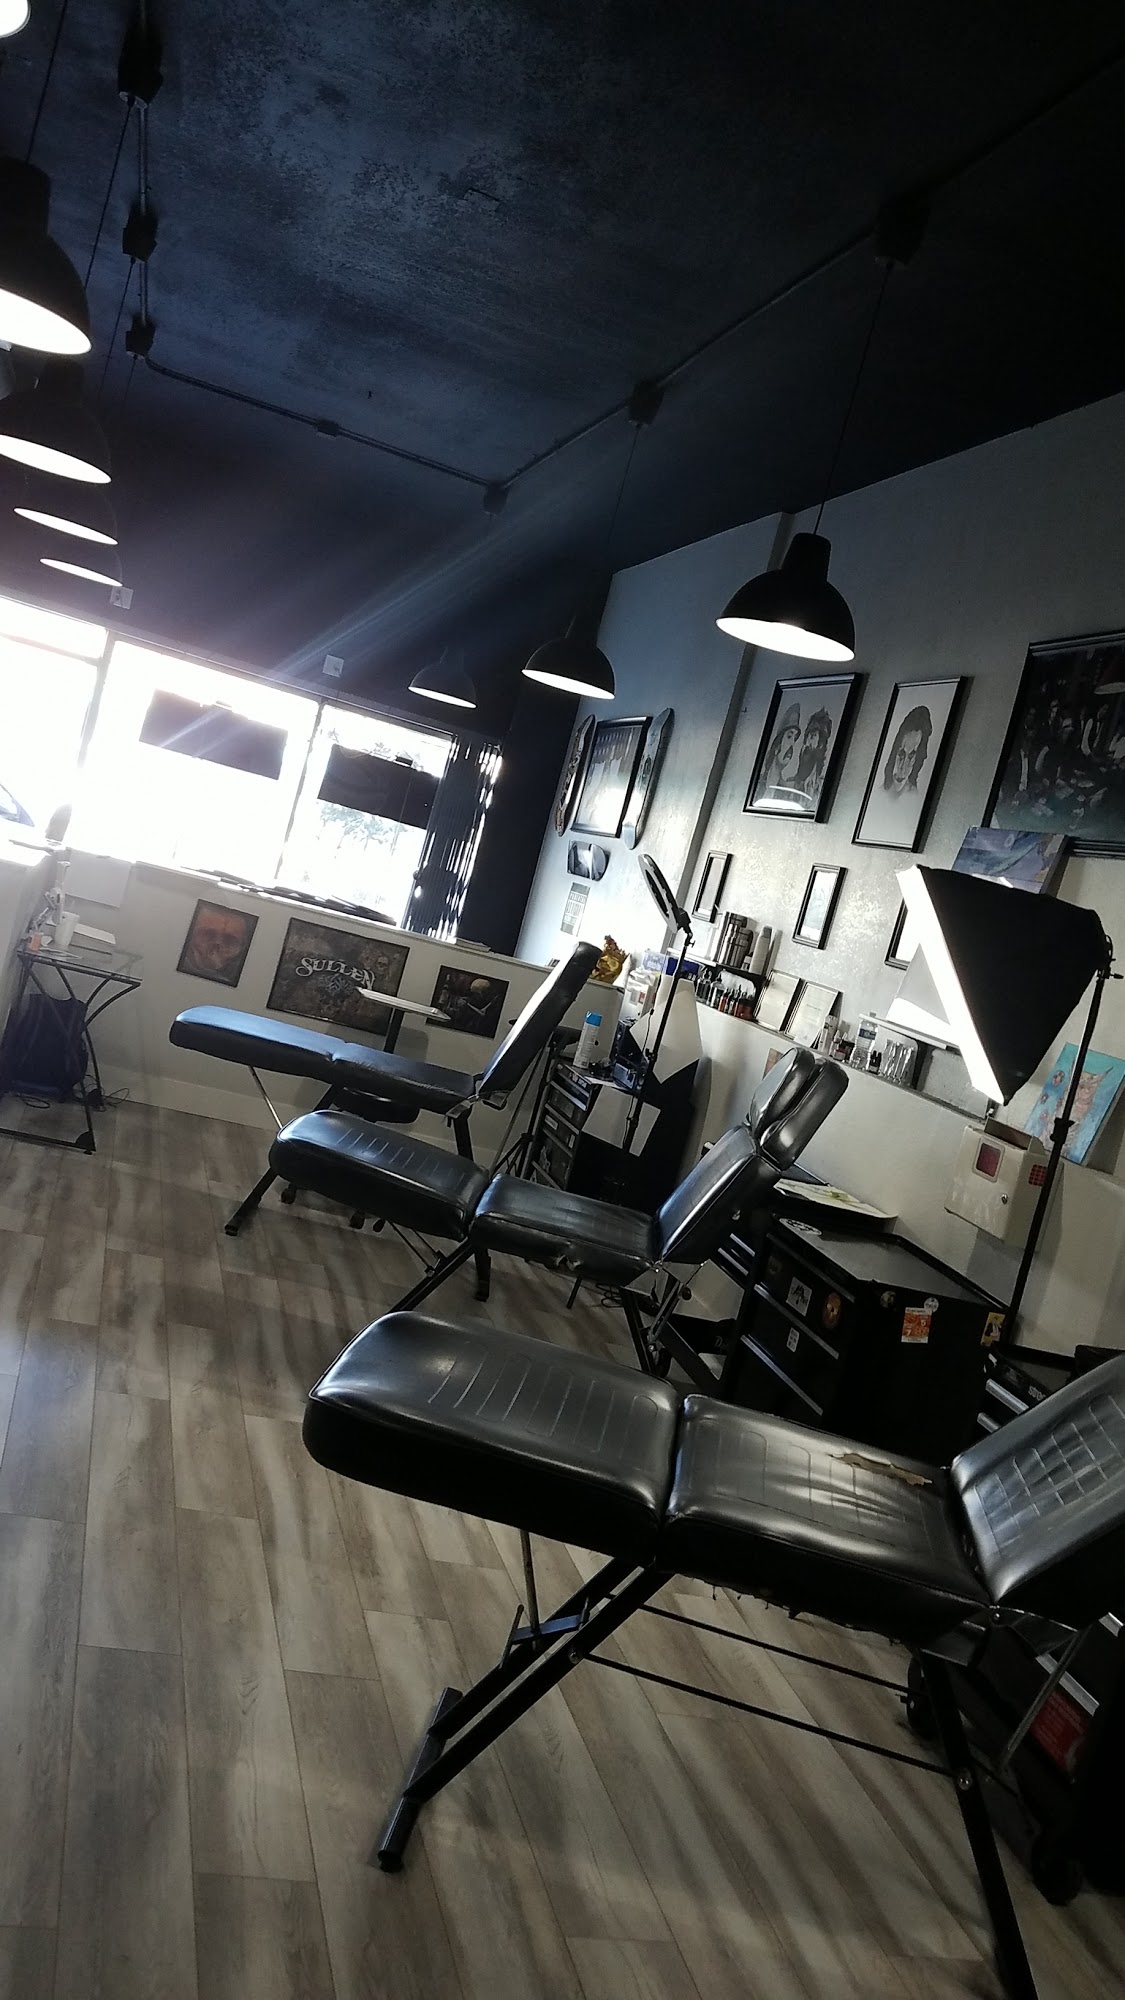 The Kingdom Tattoo Studio